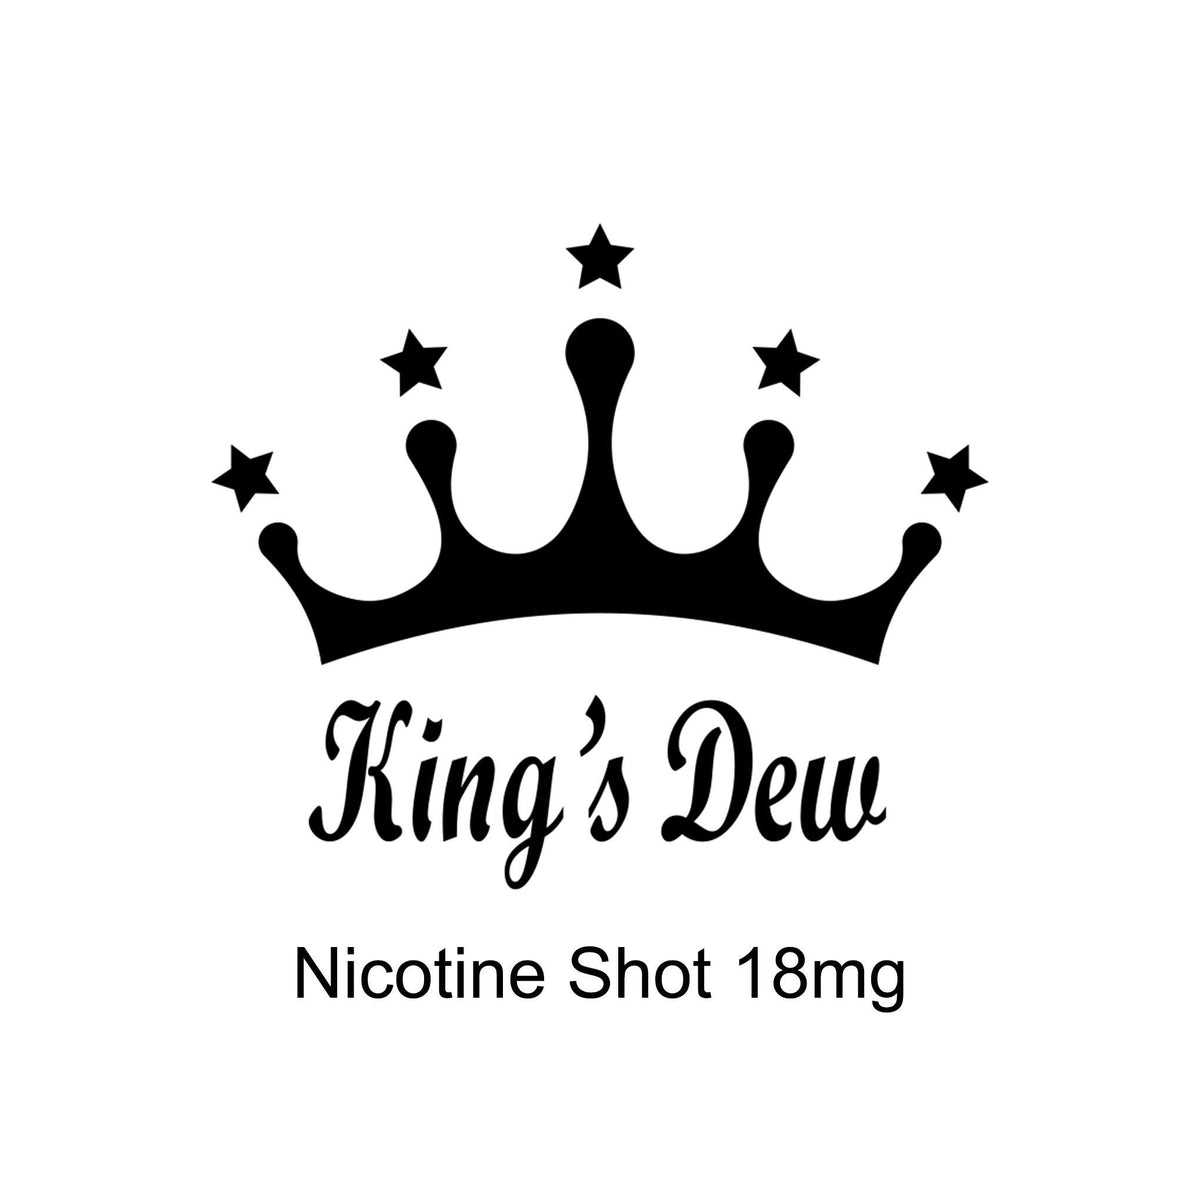 King's Dew Nicotine Shot 18mg